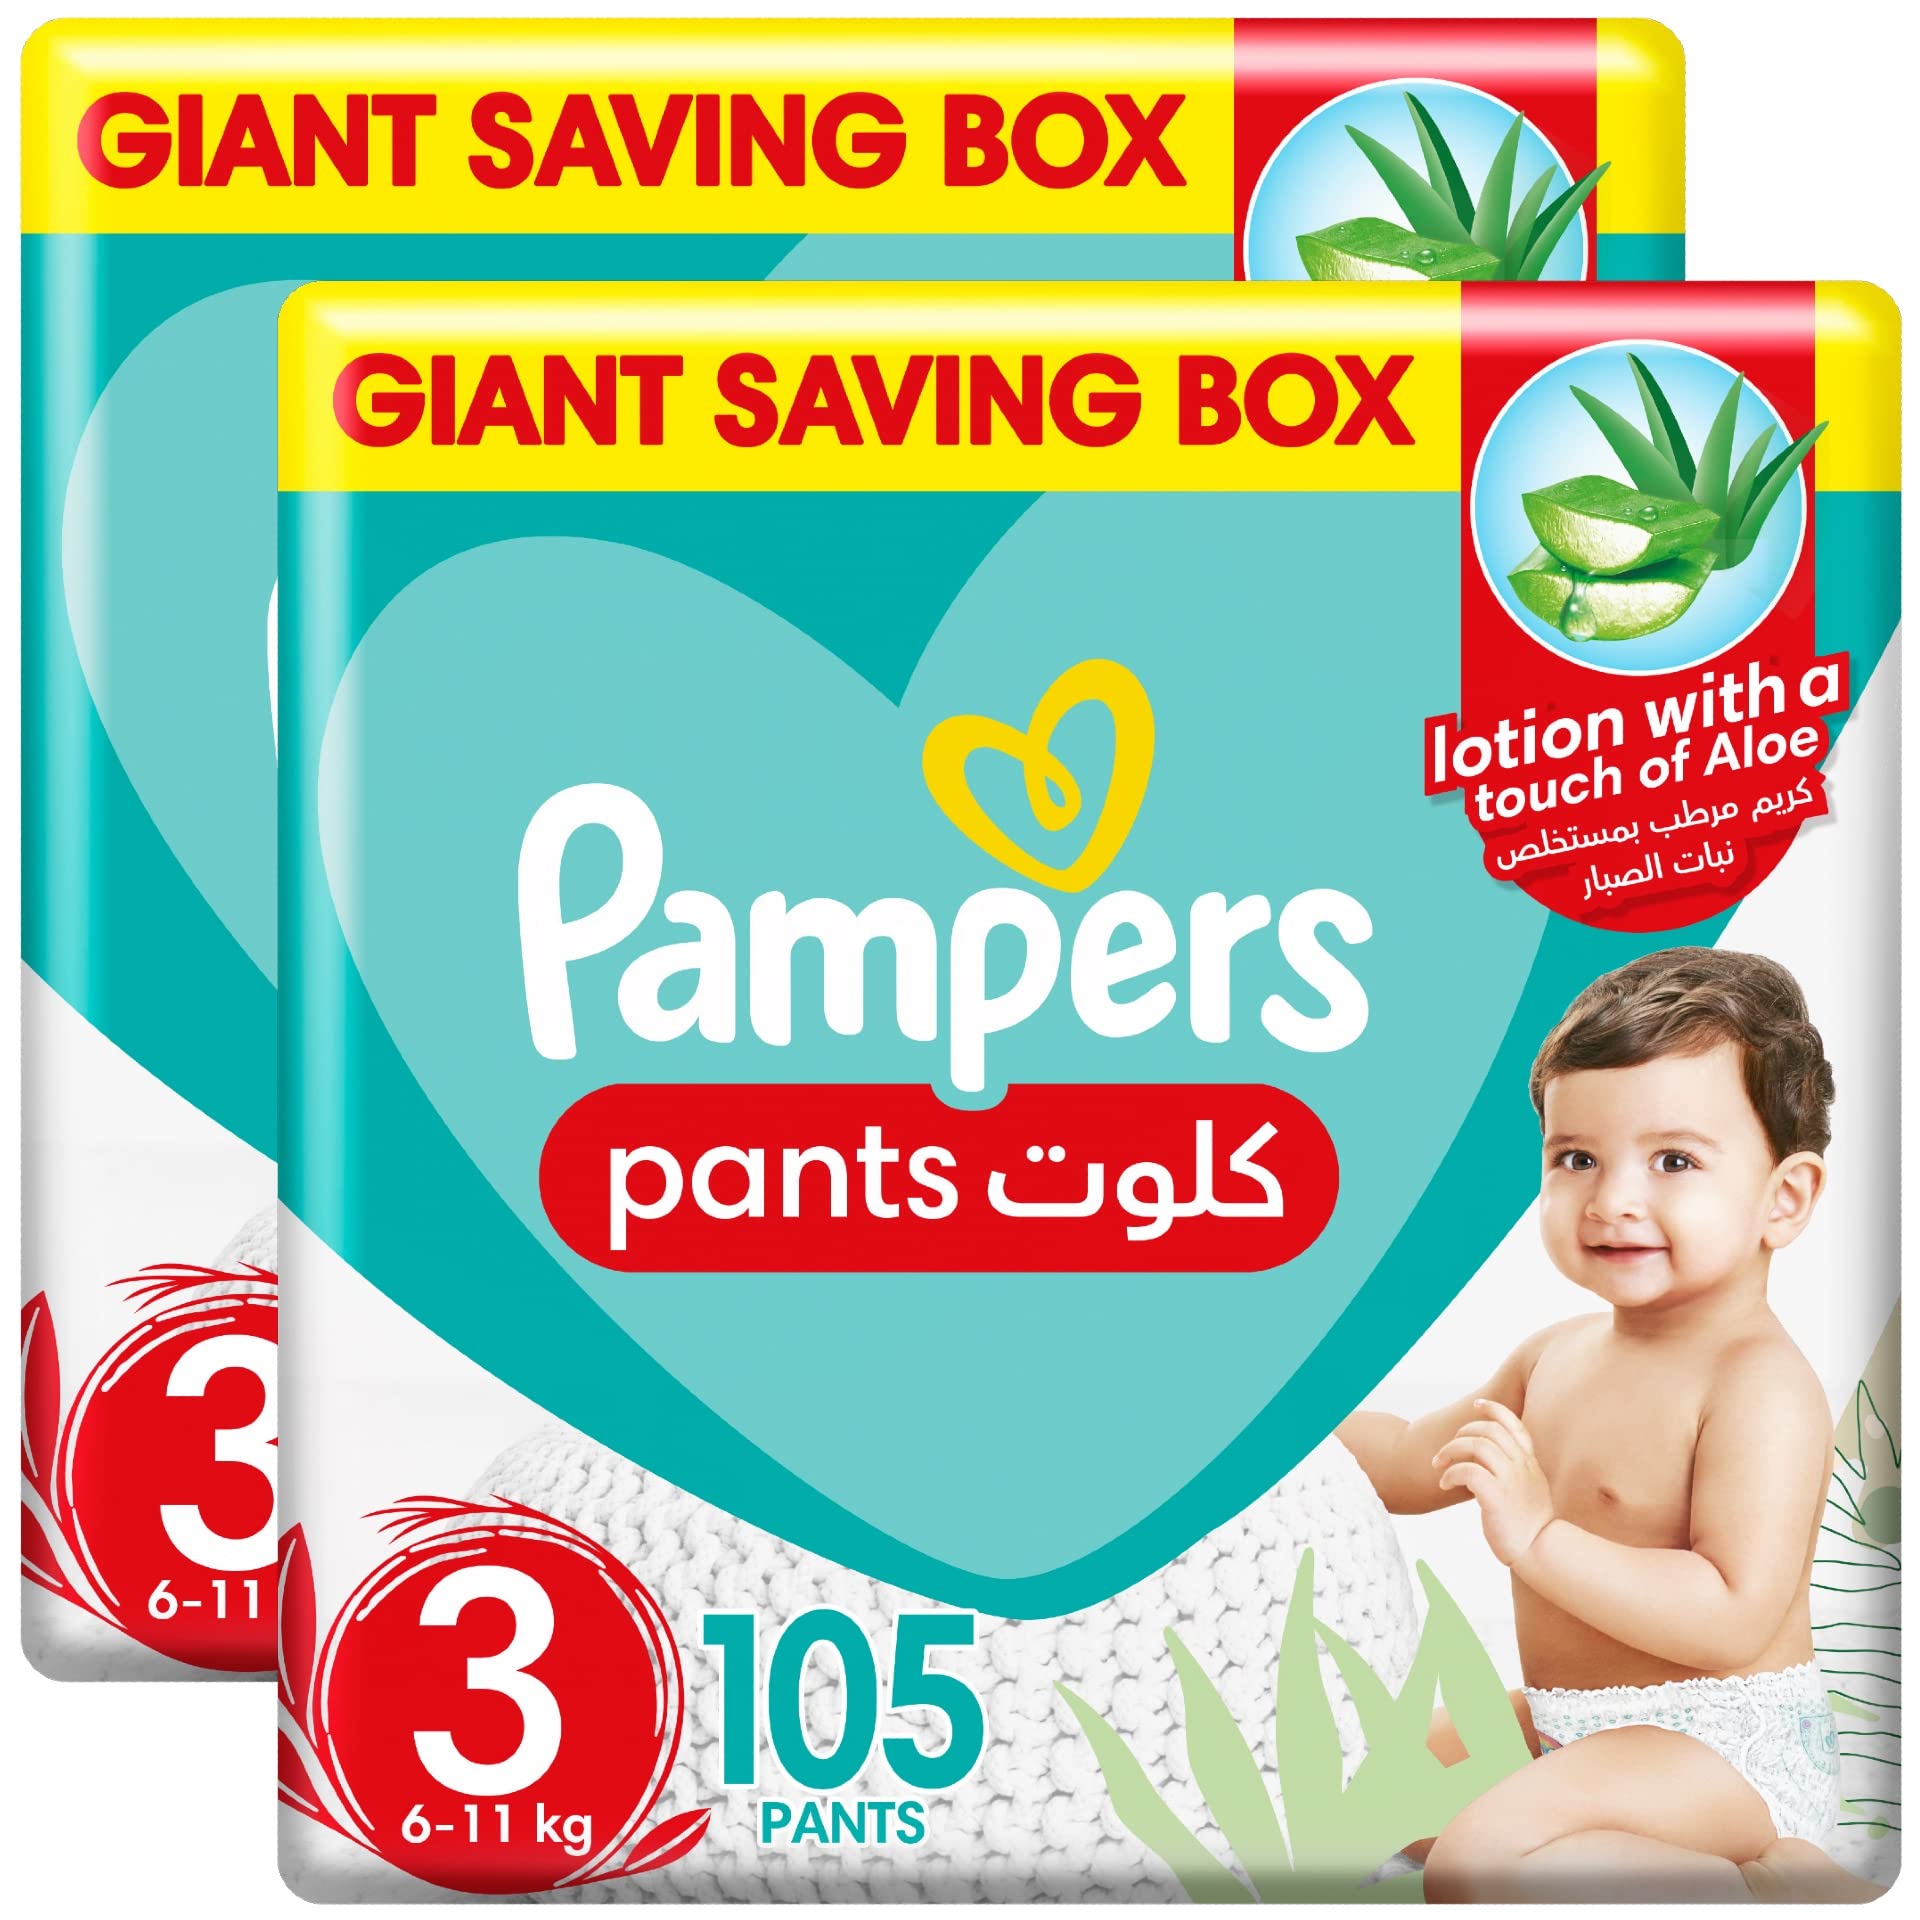 Pampers Baby-Dry Pants with Aloe Vera Lotion, Stretchy Sides, Leakage Protection Size 3, 6-11 kg, Mega Pack 105 Pants حفاضات بامبرز بتصميم سروال مقاس 3 بحجم متوسط للاطفال وزن من 6 الى 11 كغم، 105قطع